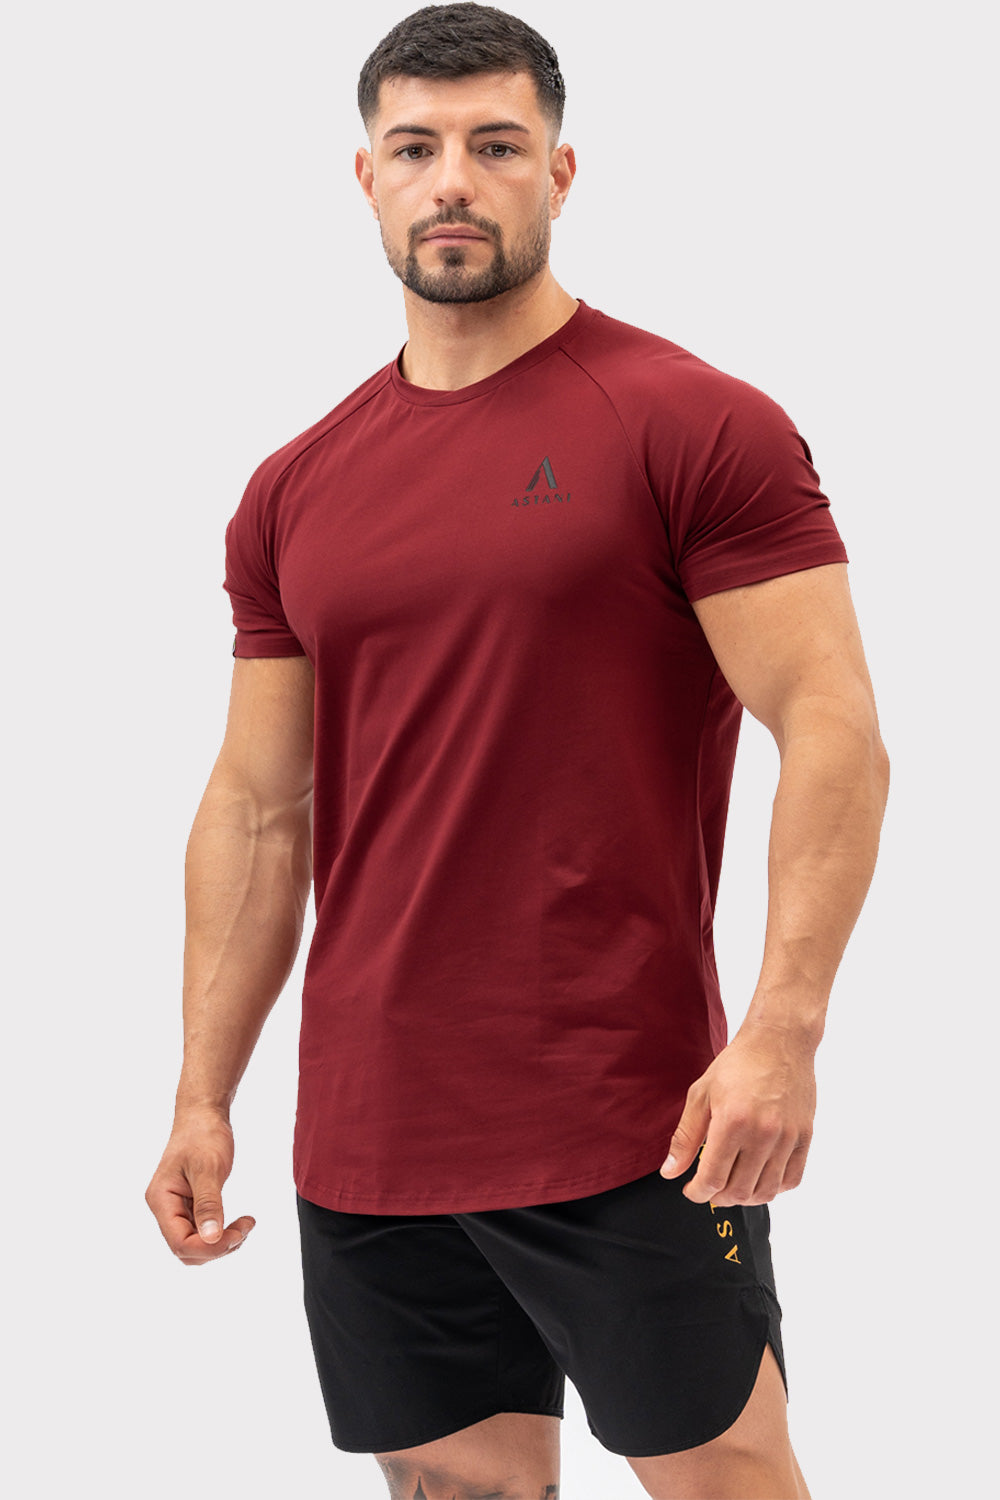 A CODE T-Shirt - Borgonha